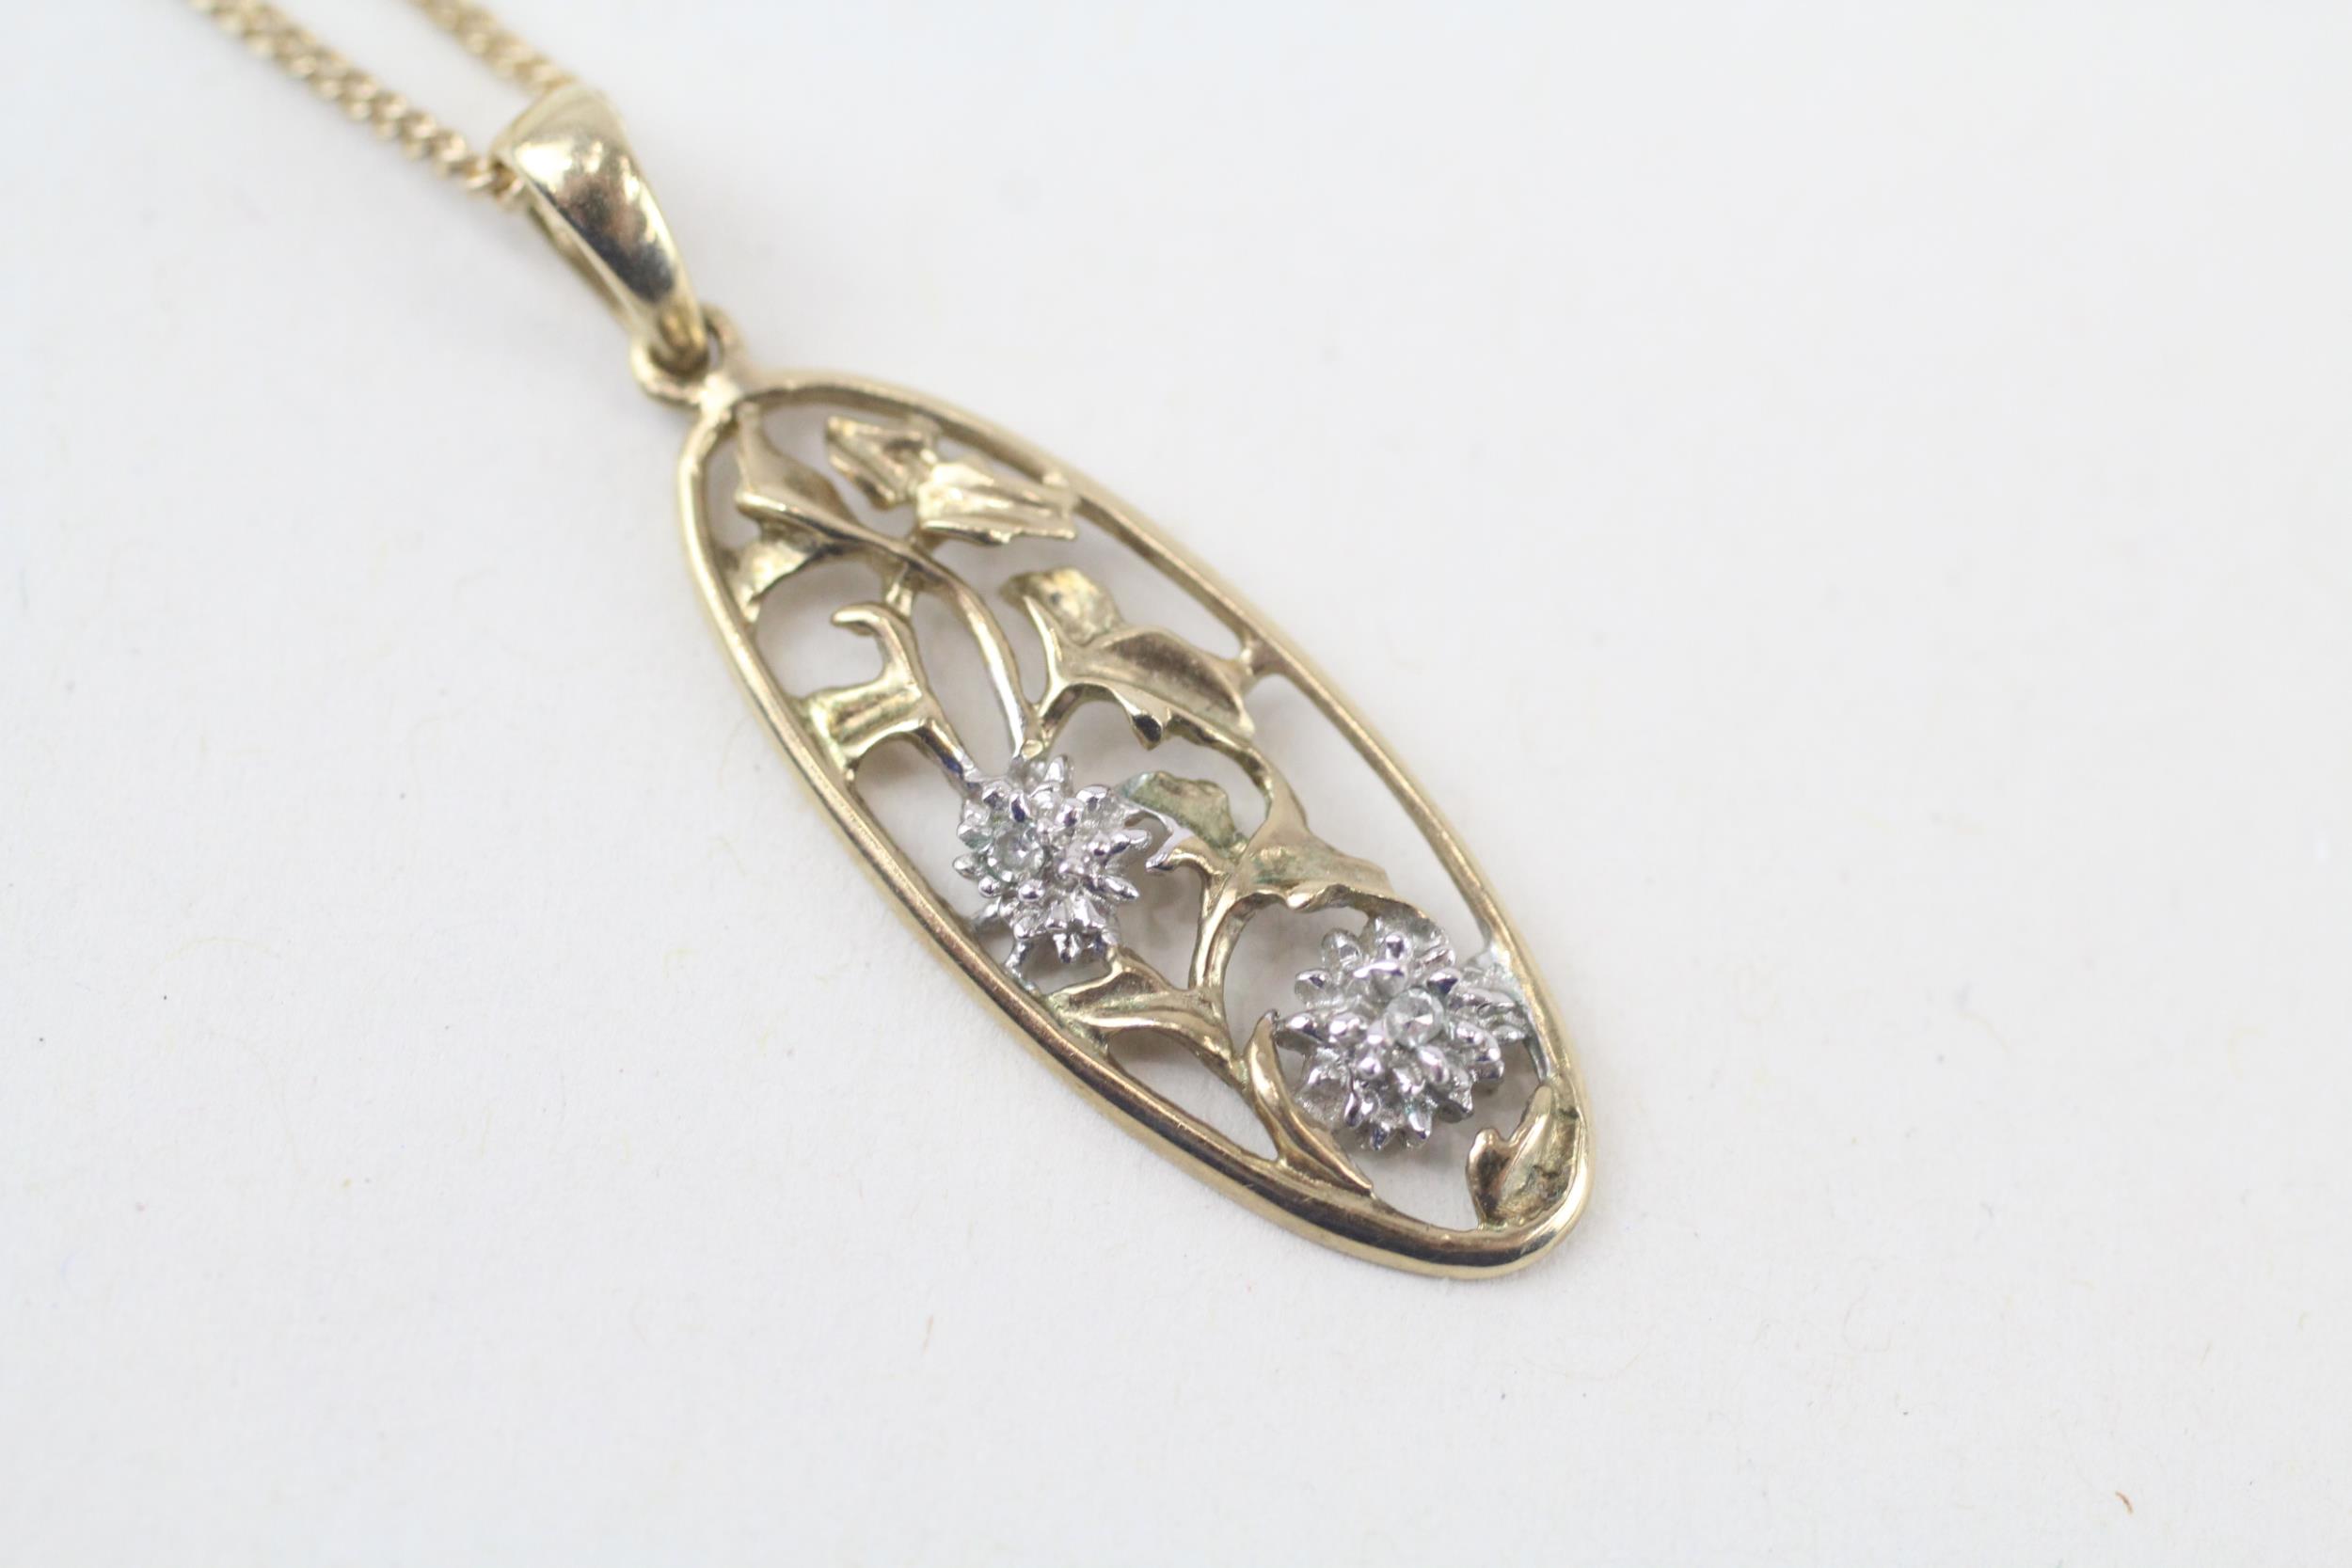 9ct gold diamond set floral pendant necklace (2.4g) - Image 2 of 4